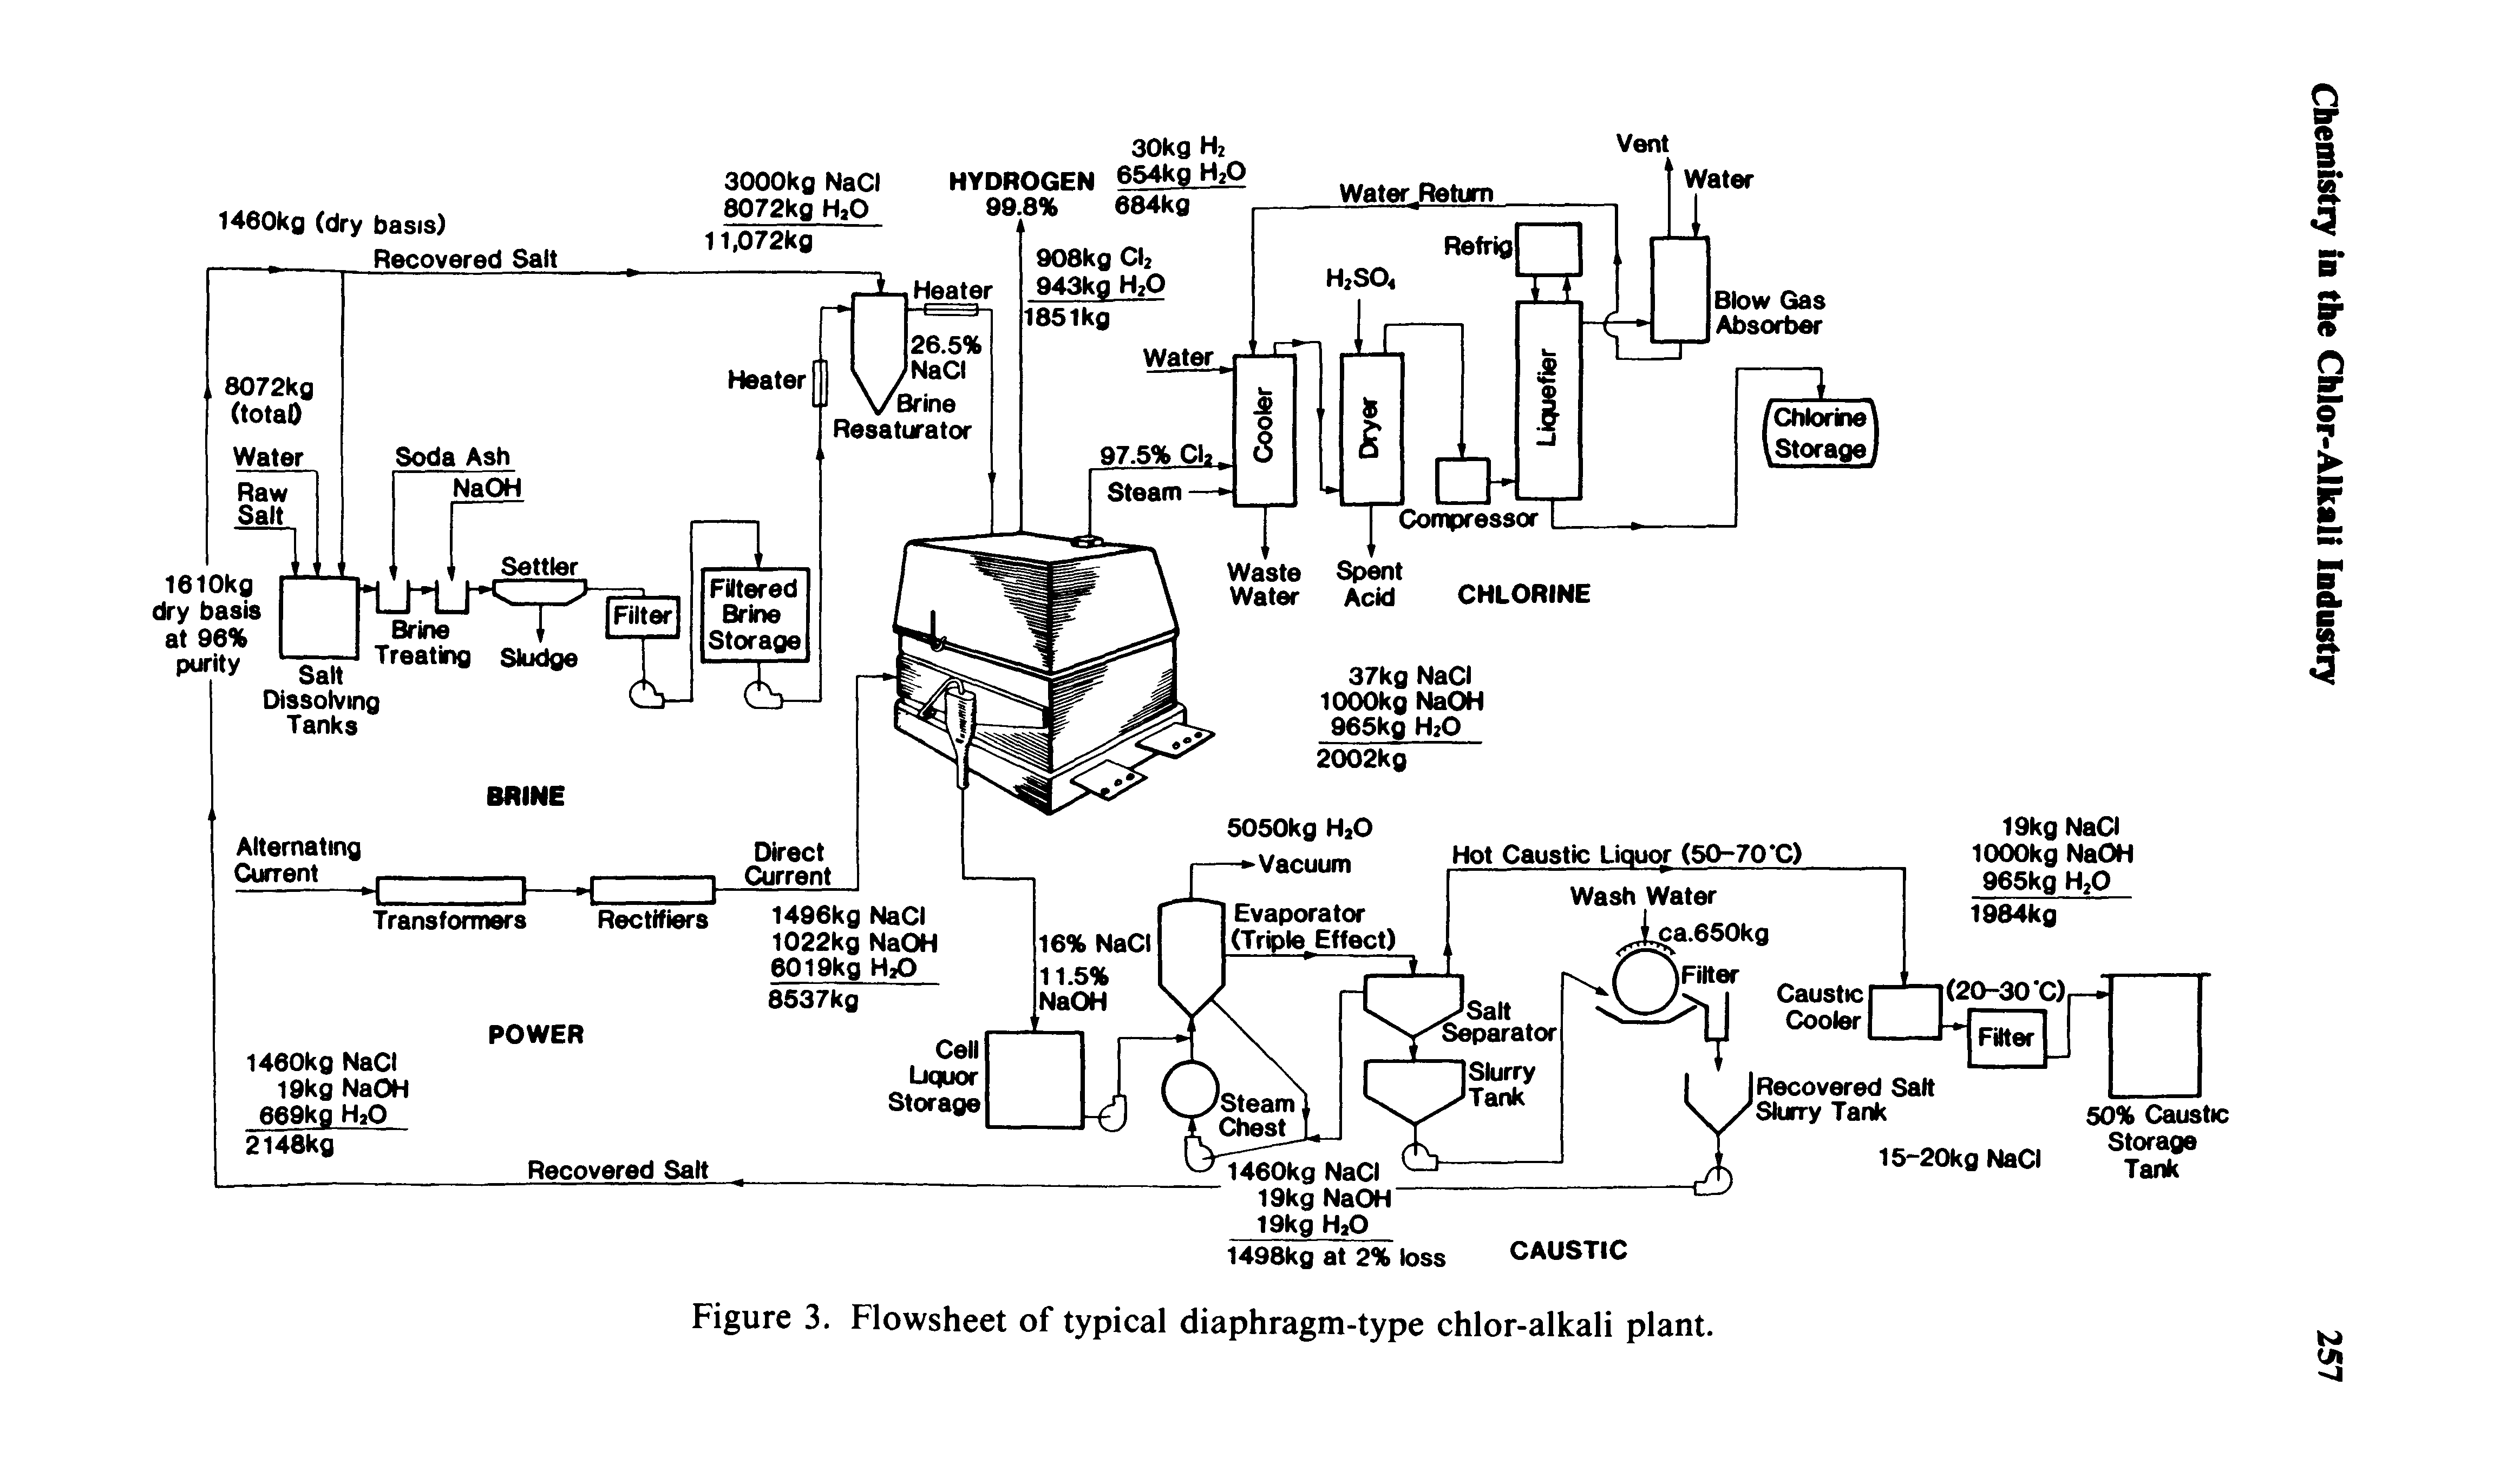 Figure 3. Flowsheet of typical diaphragm-type chlor-alkali plant.